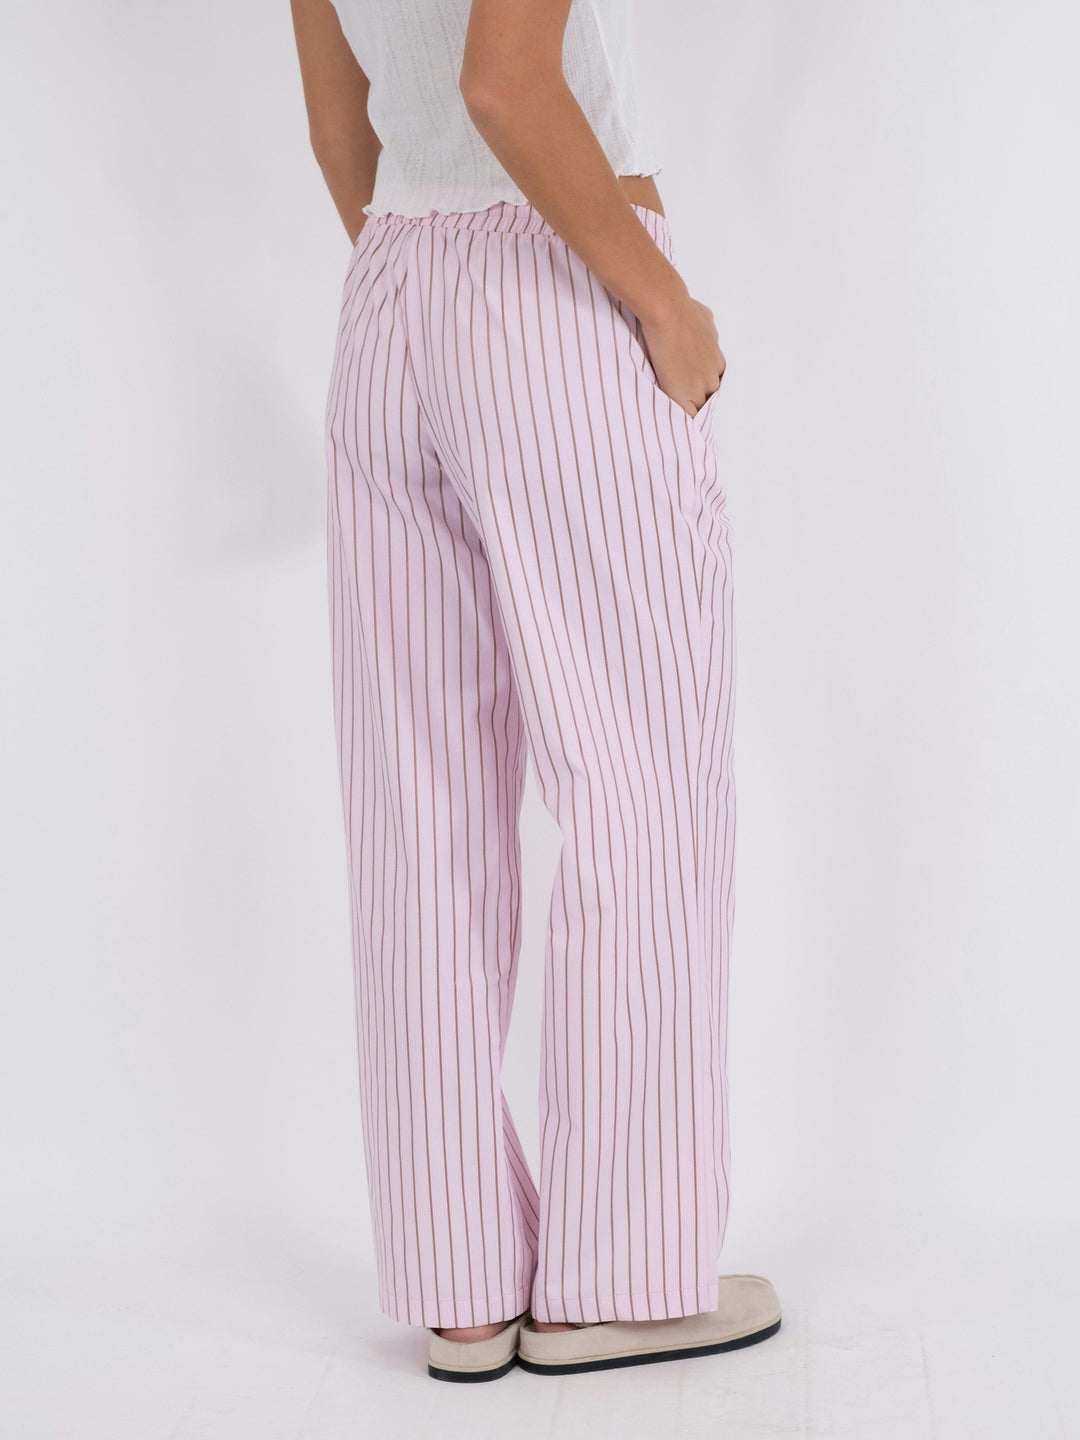 Neo Noir - Sonar Multi Stripe Pants - Light Pink